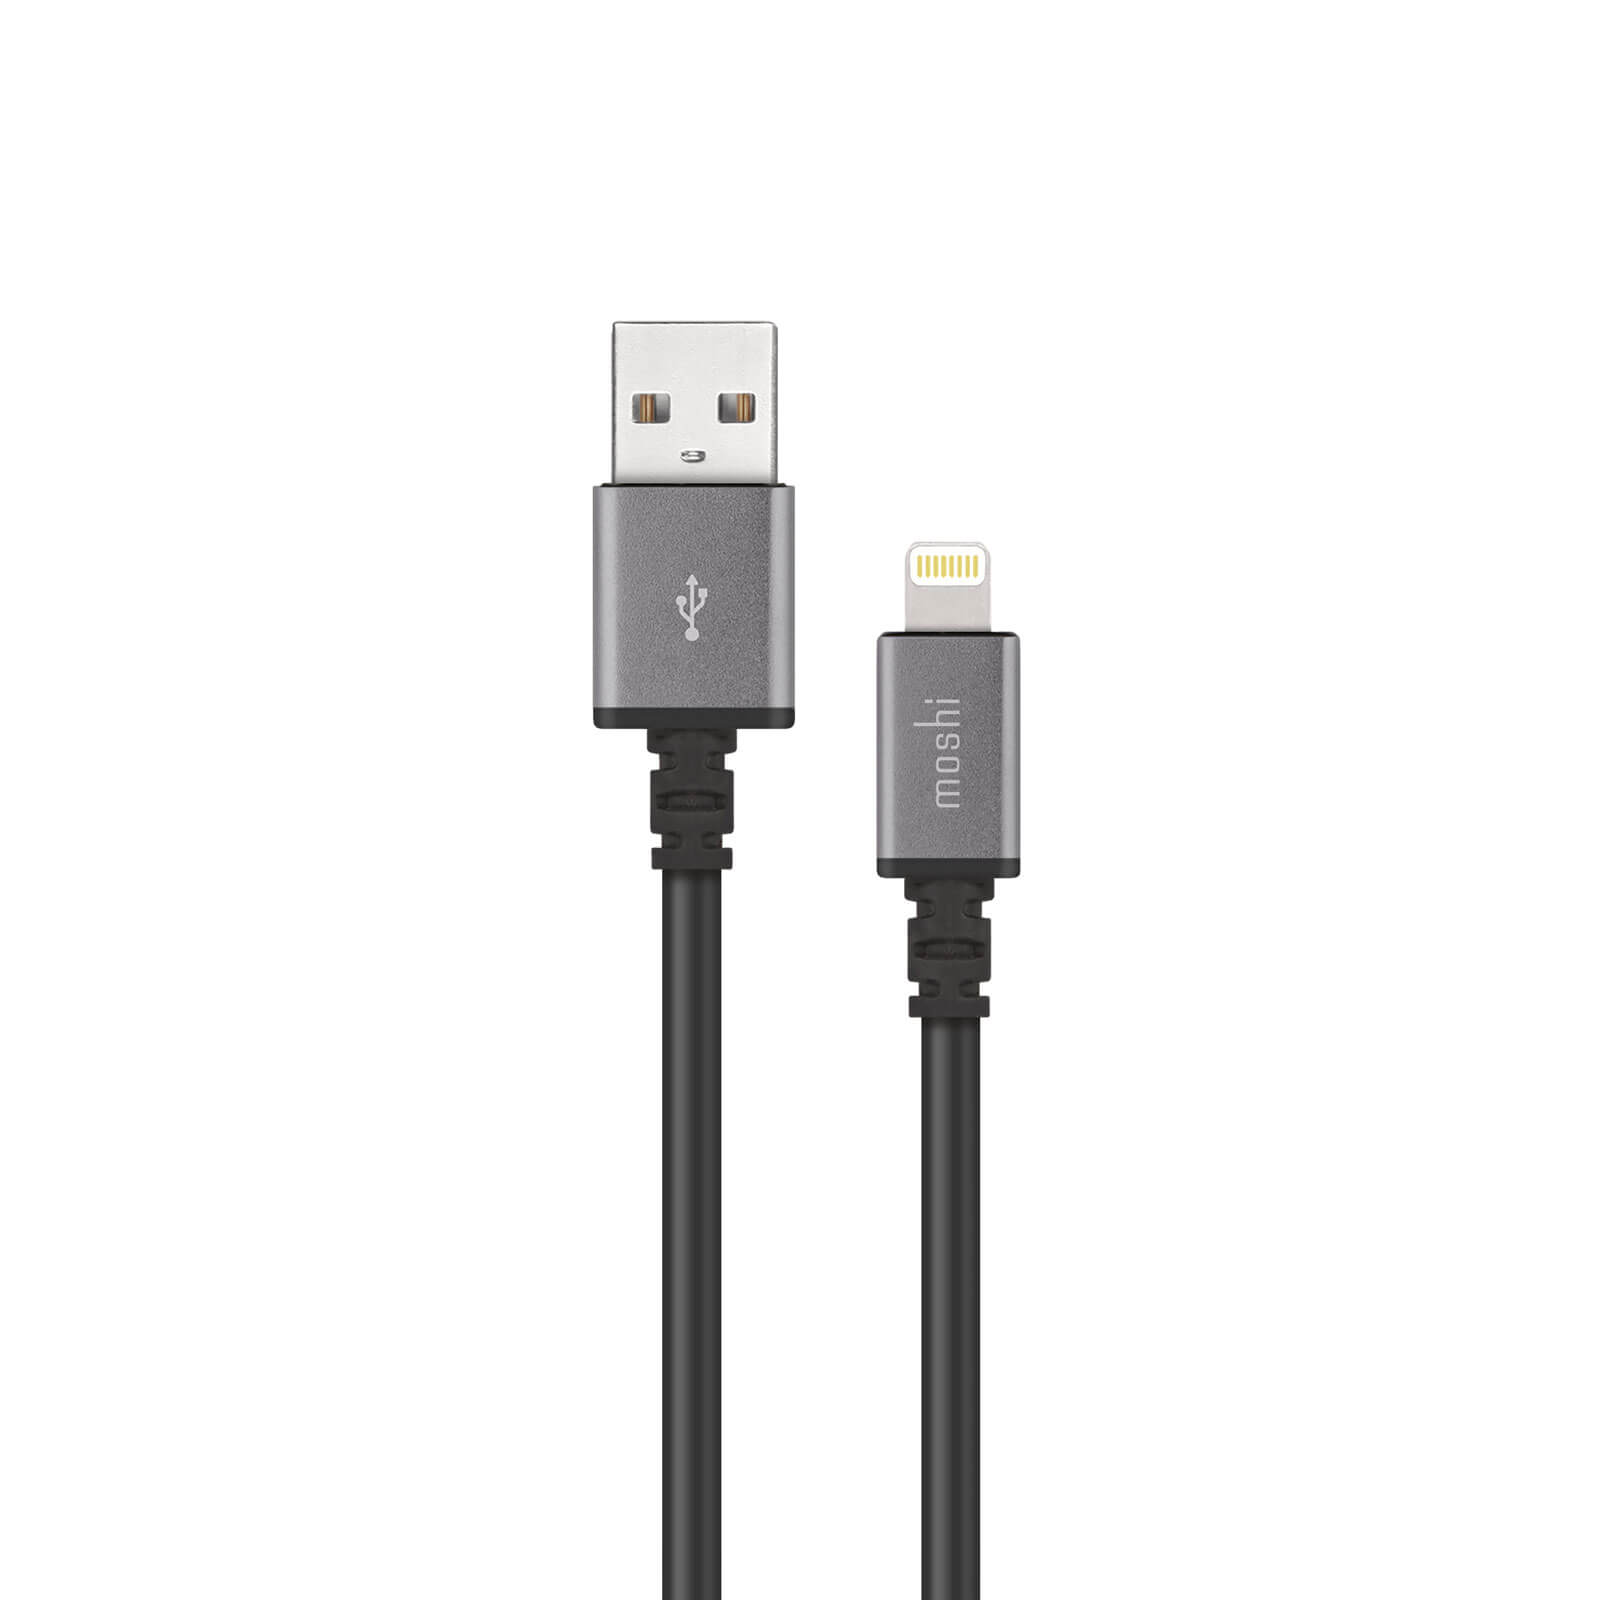 Moshi Lightning to USB Cable 3 m. - Lightning кабел за iPhone, iPad, iPod с Lightning (300 см) (черен)